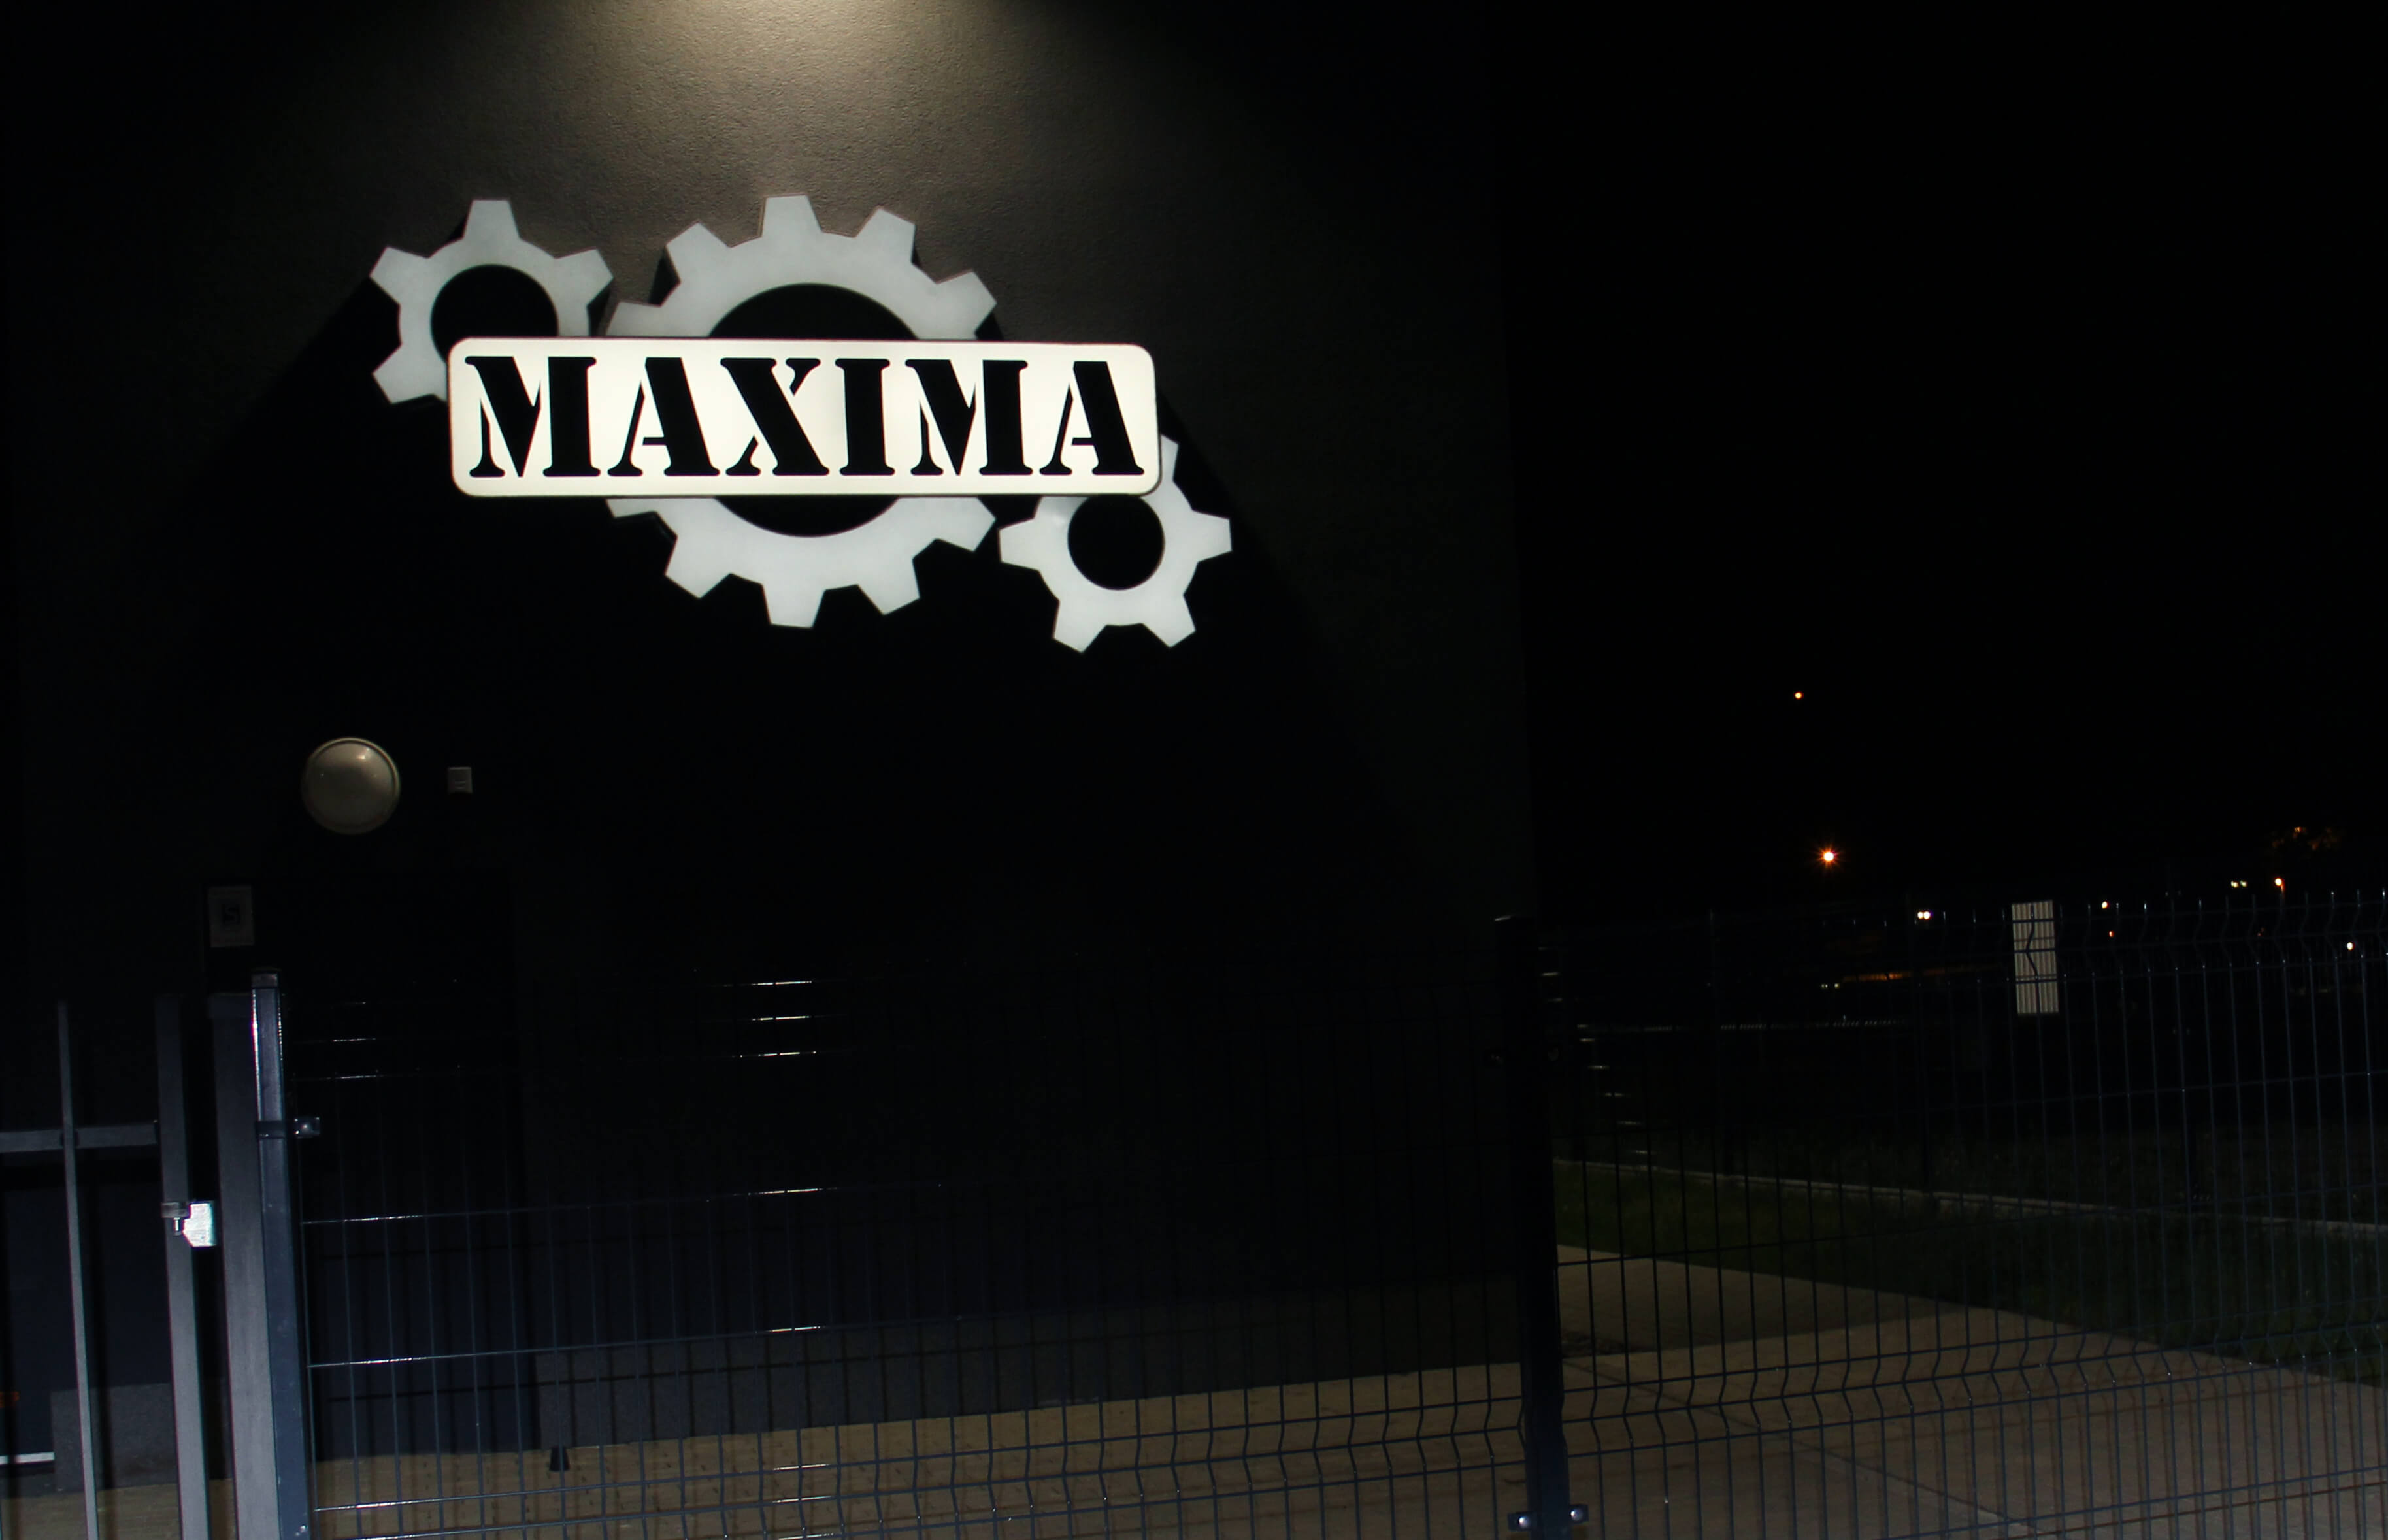 Maxima - Maxima - LED-Wandpanel mit Firmenlogo, aus Plexiglas